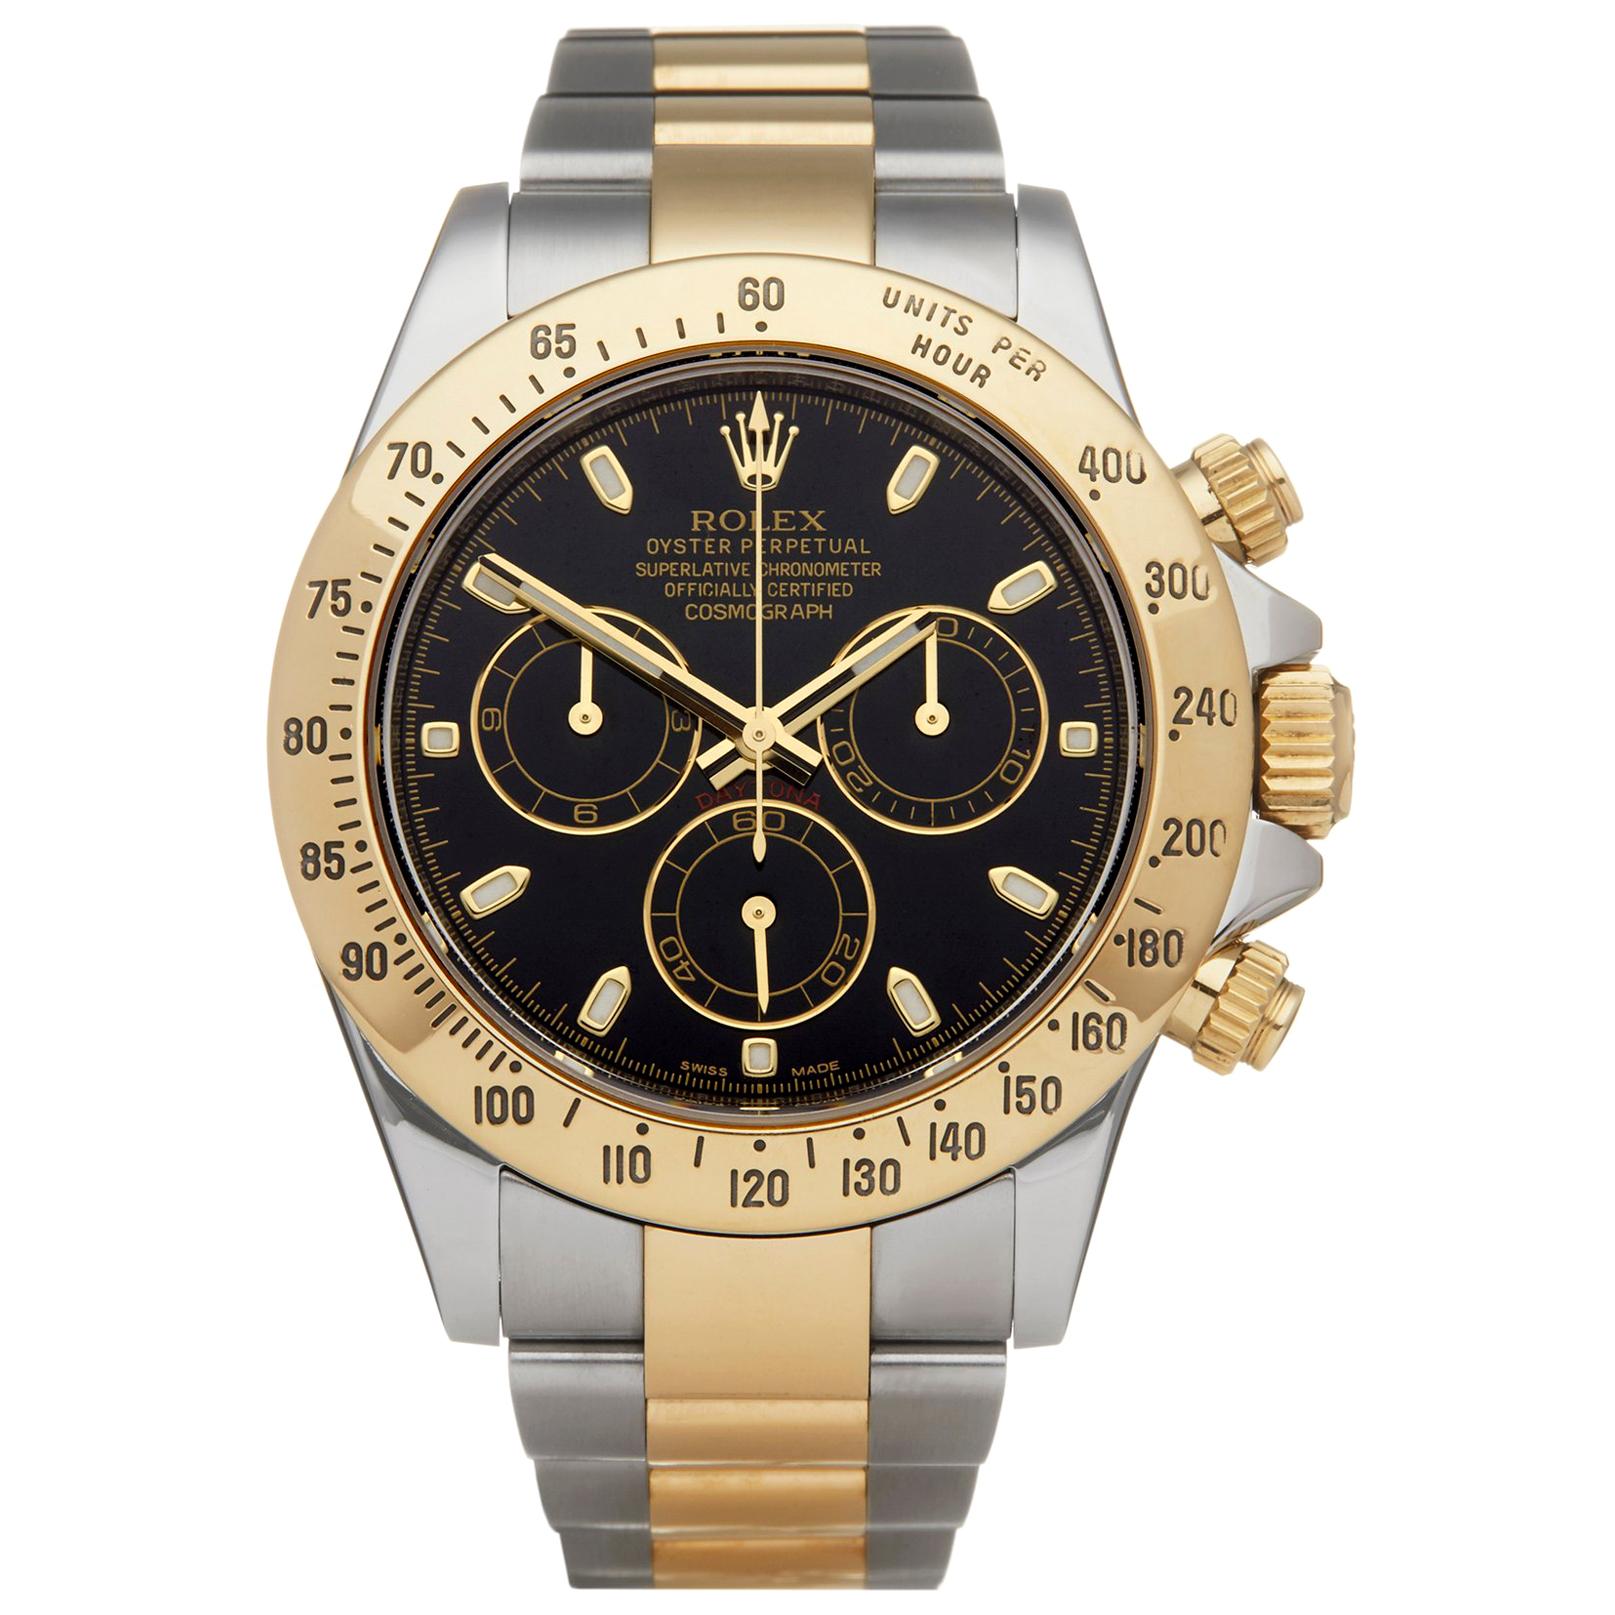 Rolex Daytona Stainless Steel and 18K Yellow Gold 116523 Wristwatch